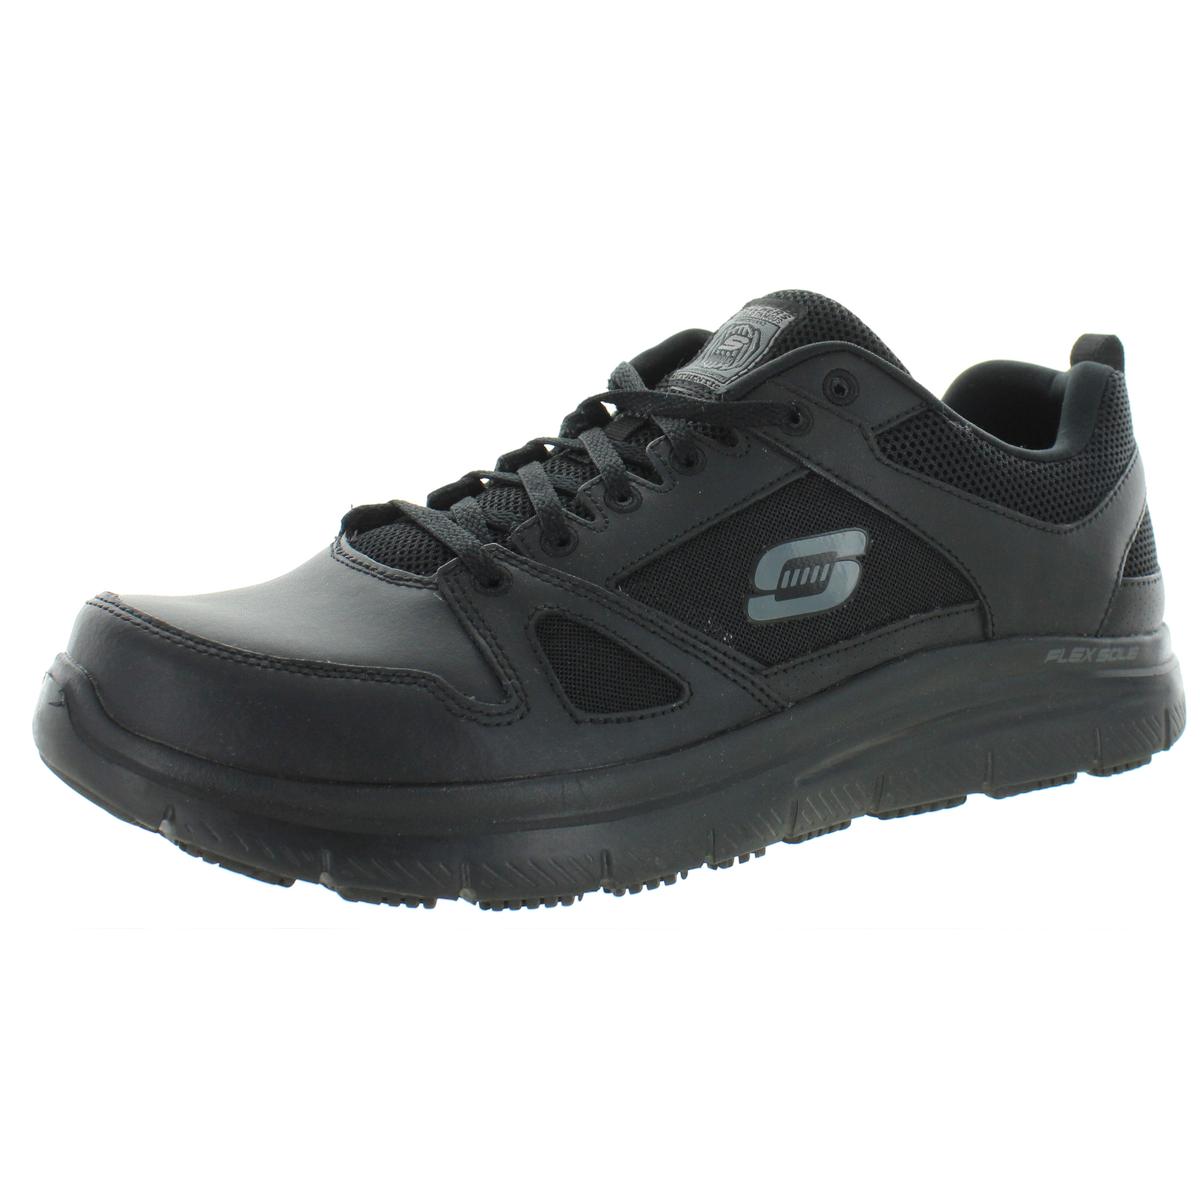 Skechers Mens Flex Advantage Black Work Shoes 11.5 Extra Wide (EE) BHFO 8670 | eBay